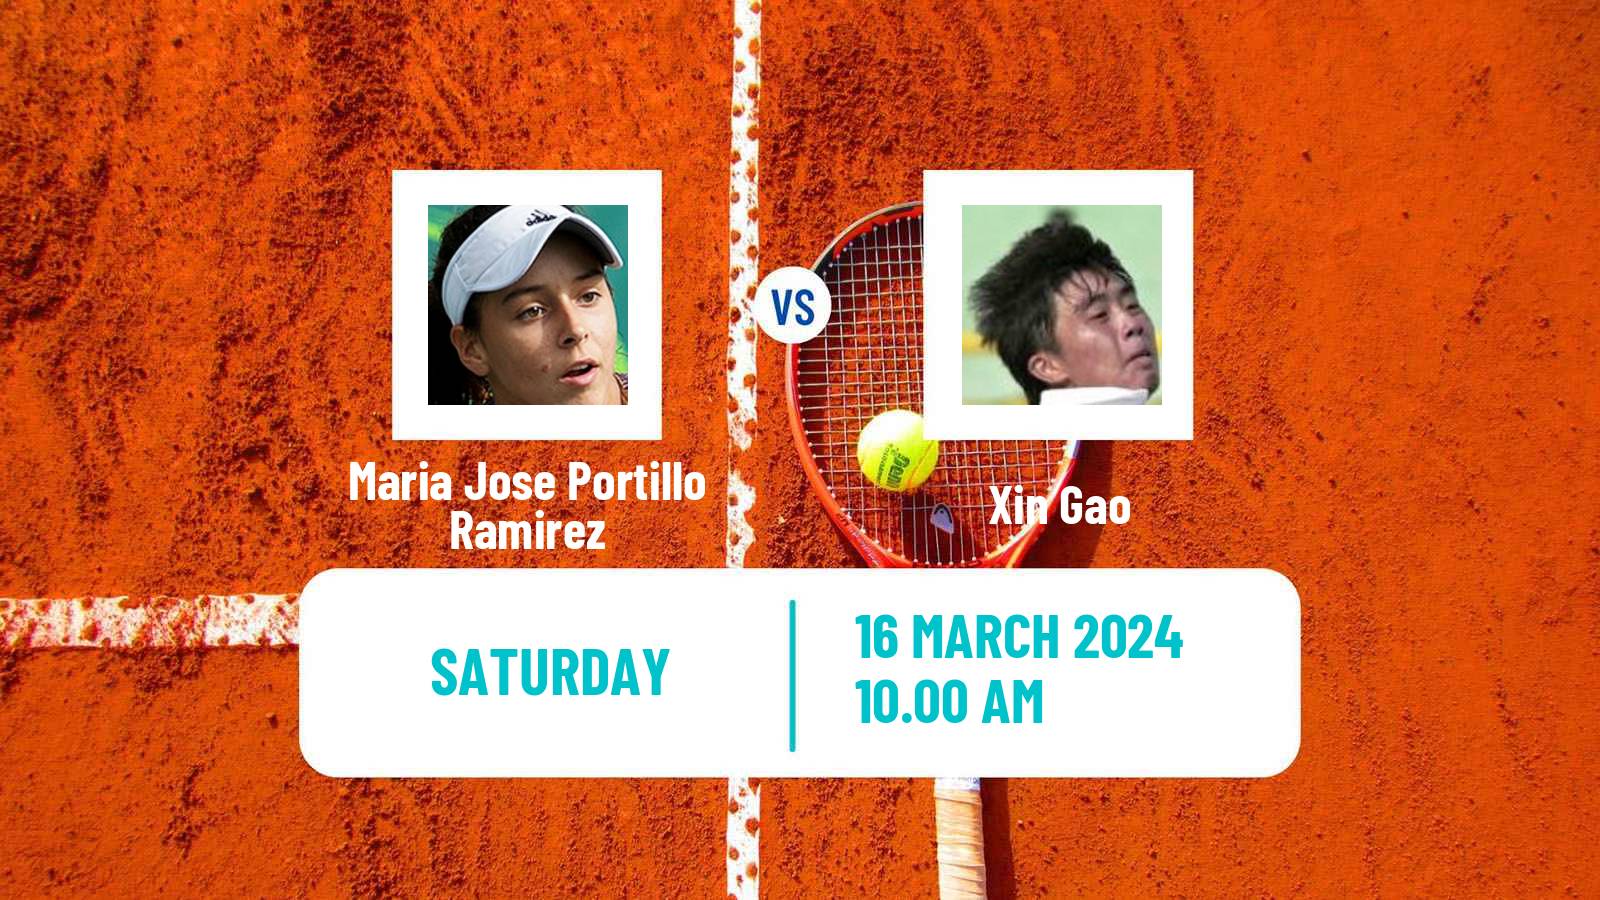 Tennis ITF W35 Santo Domingo 2 Women Maria Jose Portillo Ramirez - Xin Gao